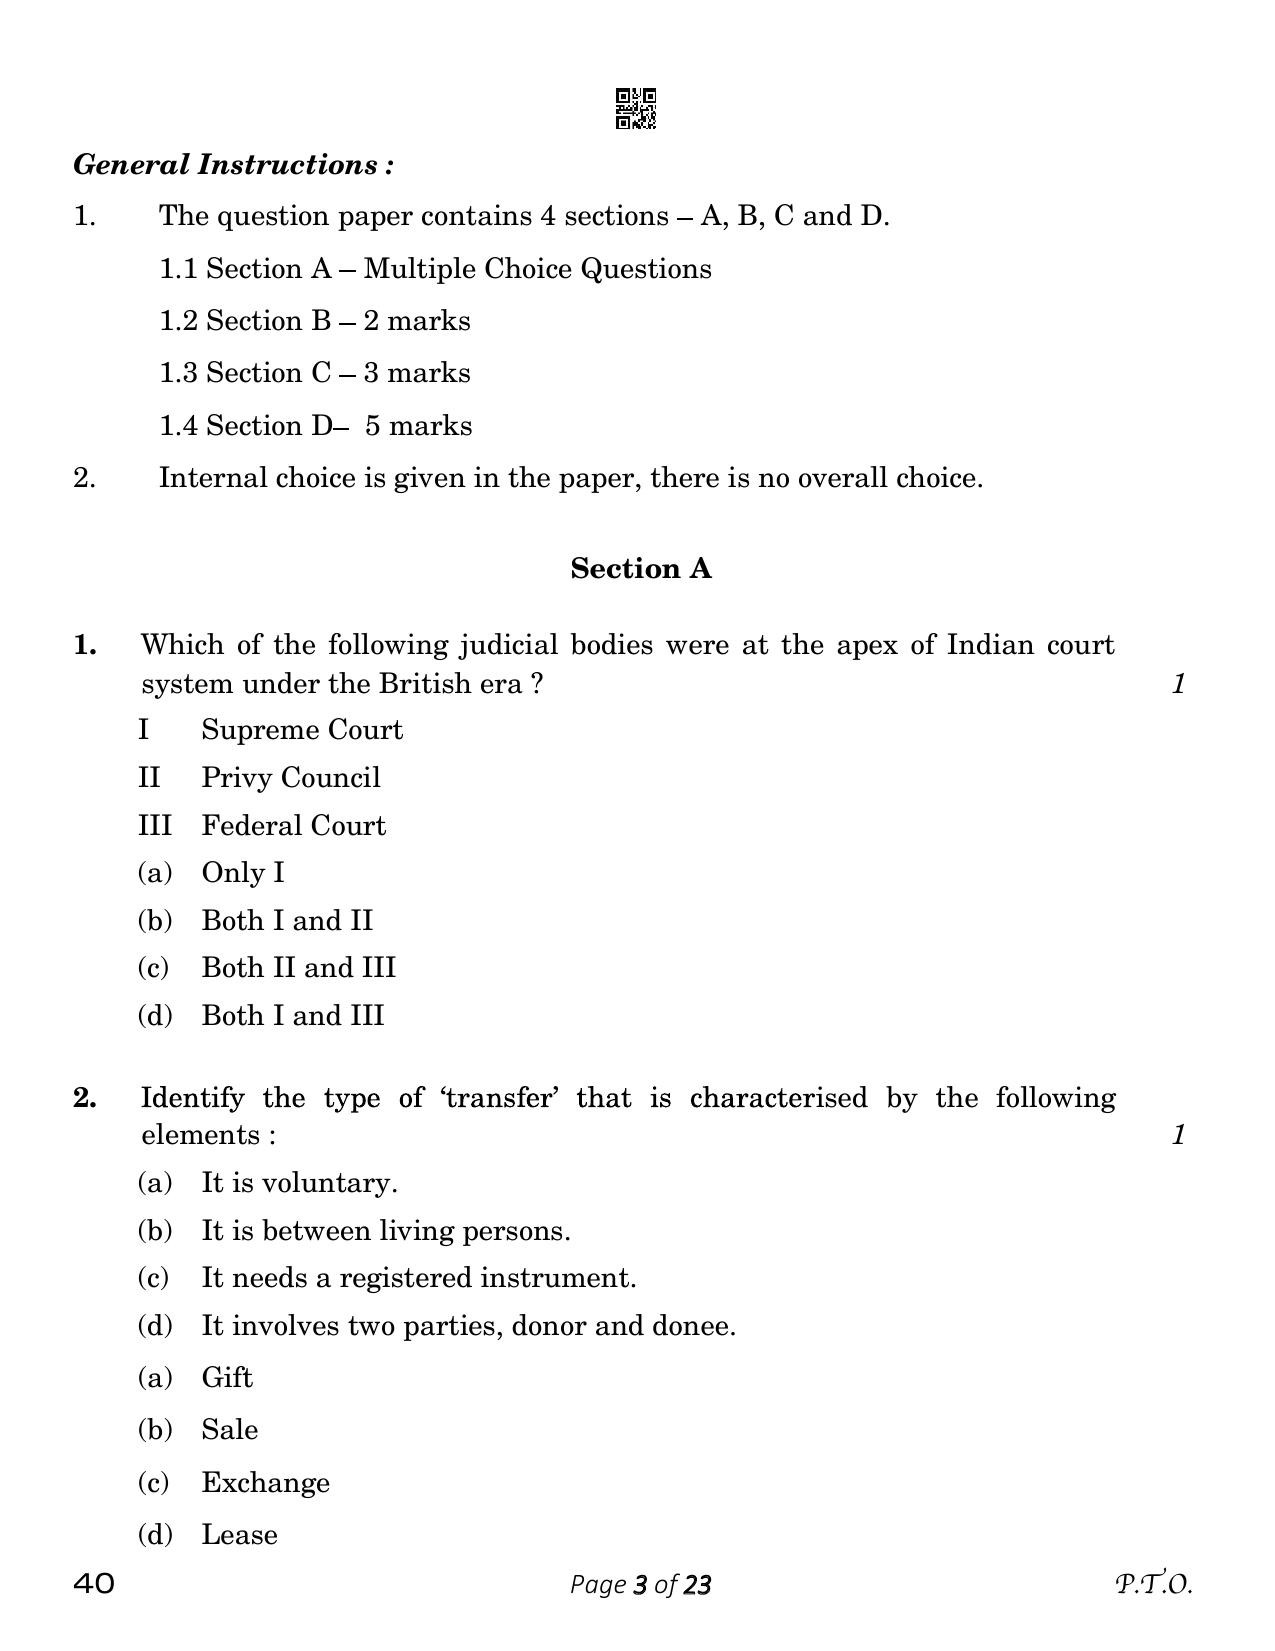 CBSE Class 12 Legal Studies (Compartment) 2023 Question Paper - Page 3